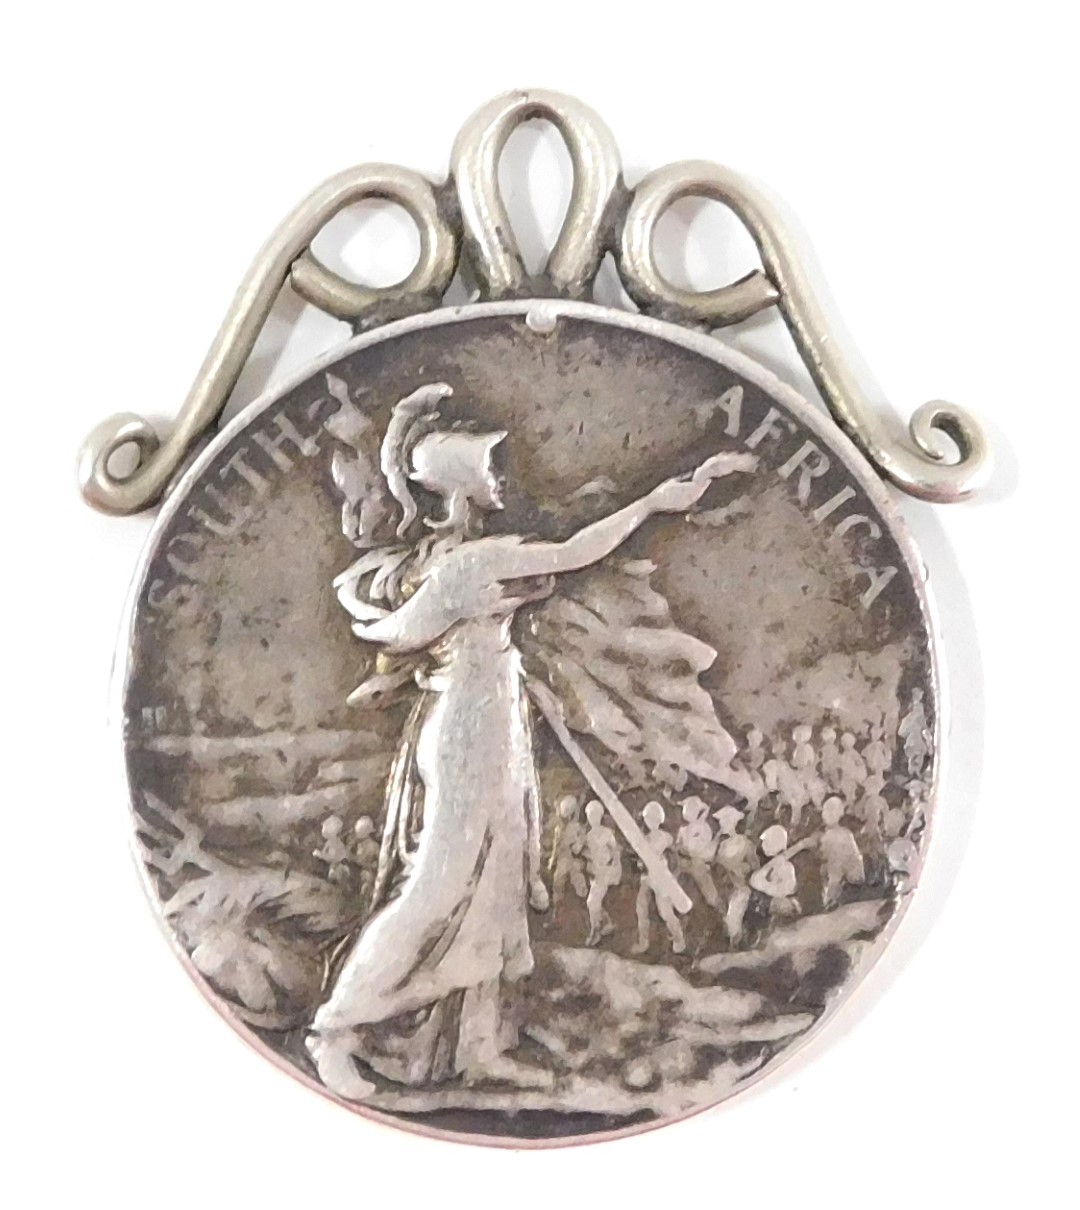 A Victoria Regina South Africa war medal.